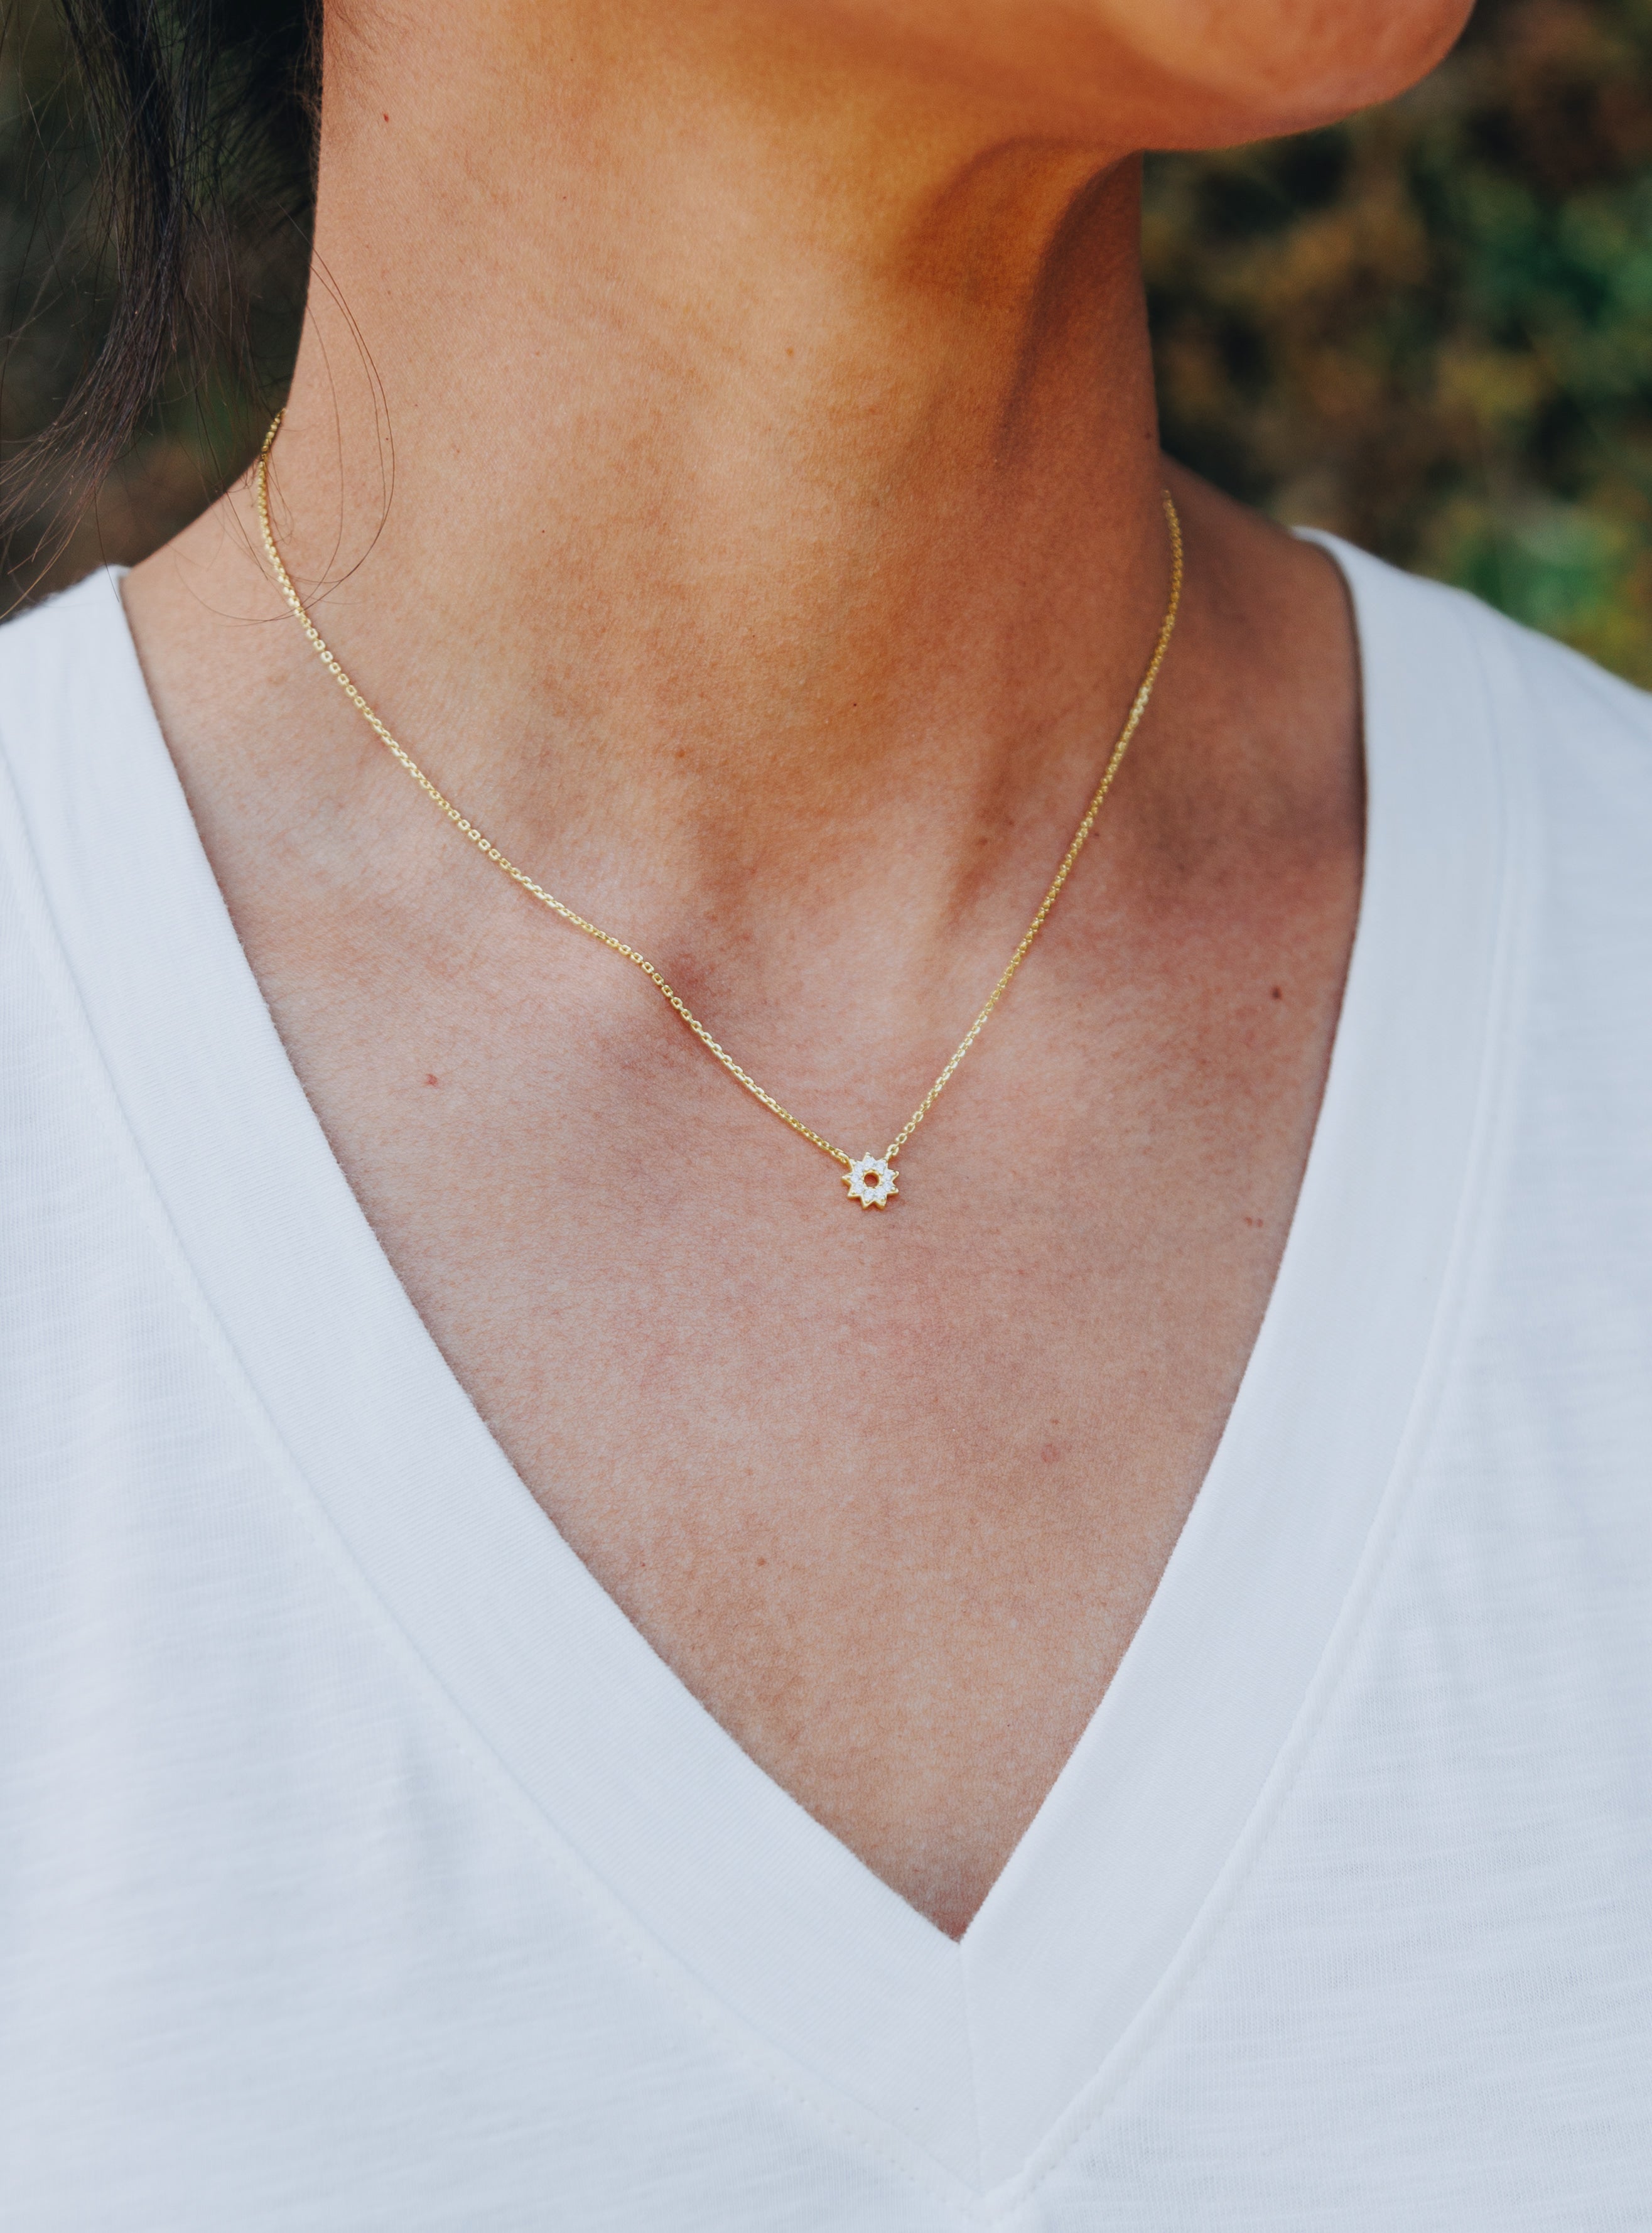 Gold Sunburst Necklace | Elegant Jewelry for Women